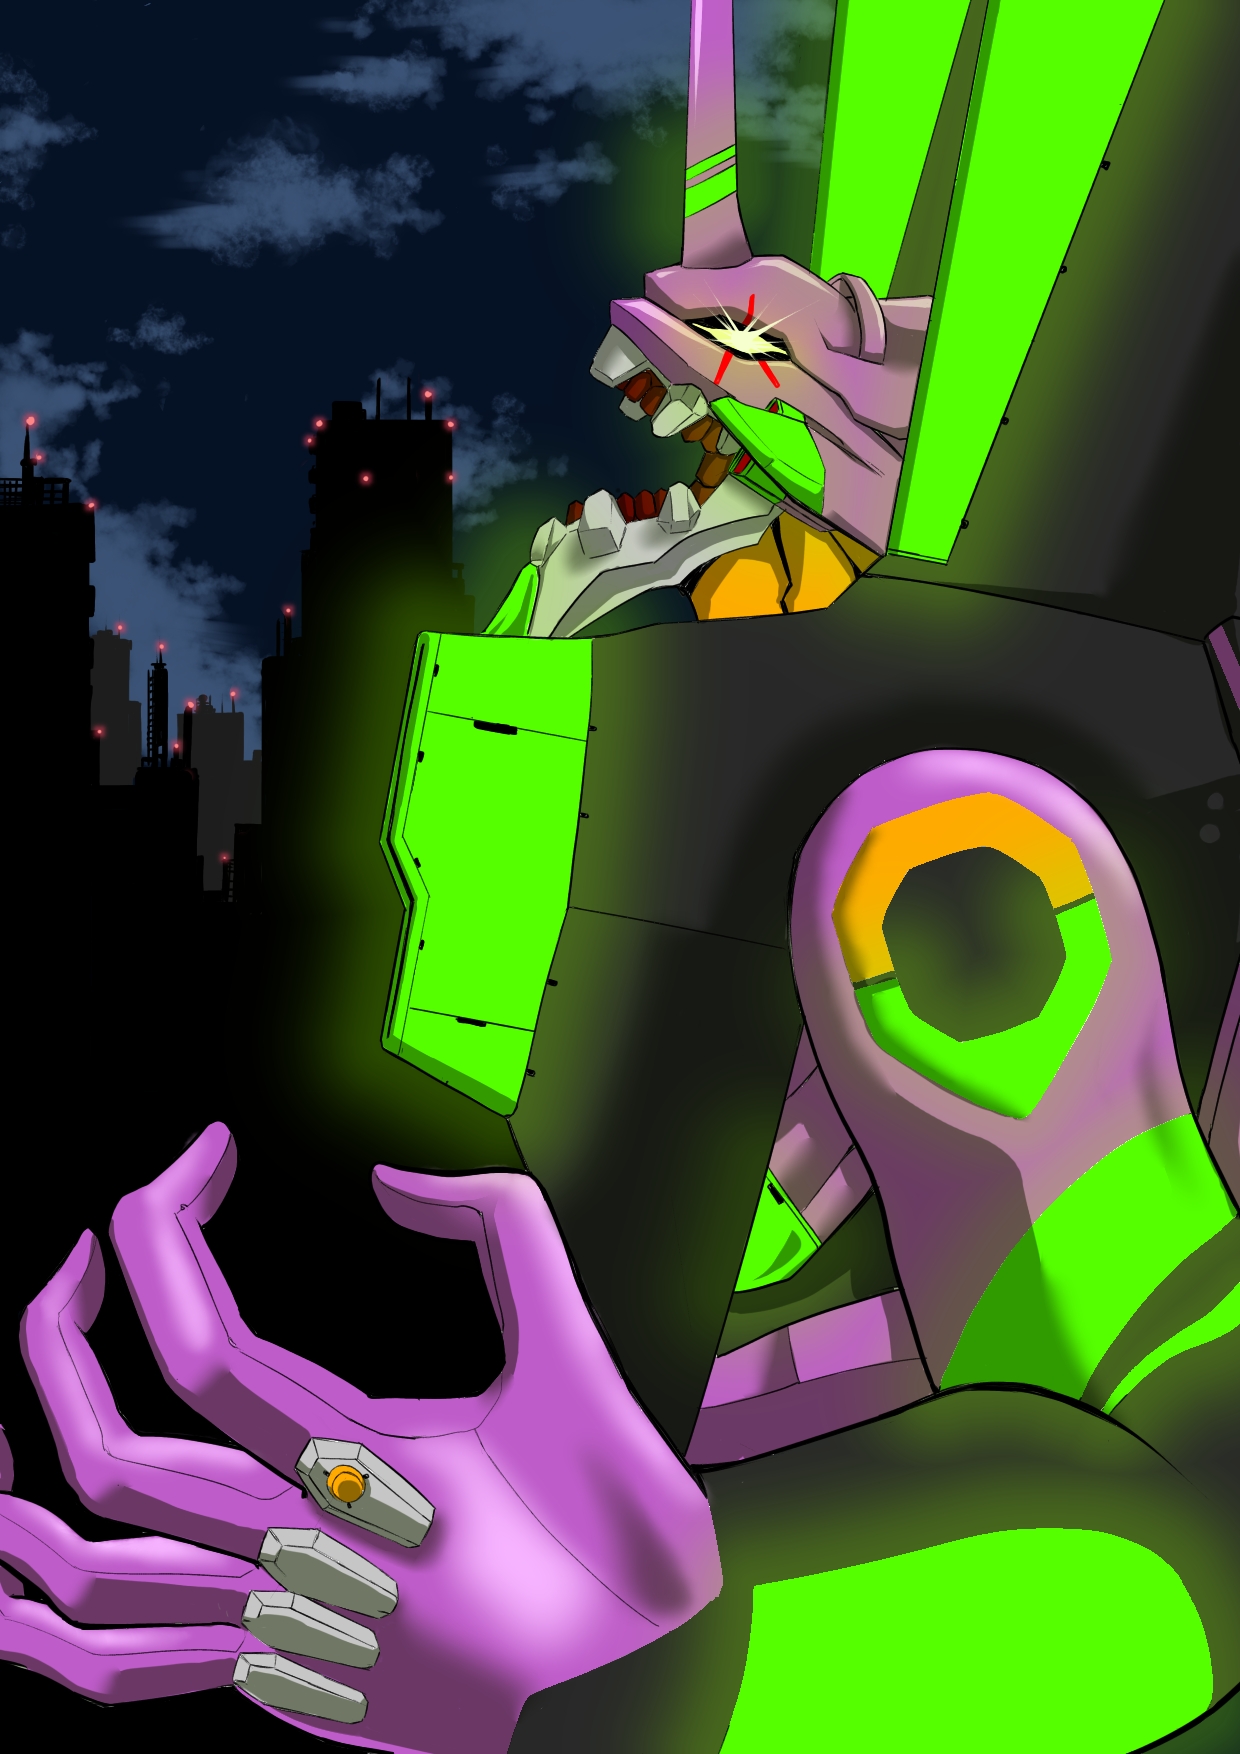 EVA Unit 01 Neon Genesis Evangelion Anime Mechs Super Robot Taisen Artwork Digital Art Fan Art 1240x1754